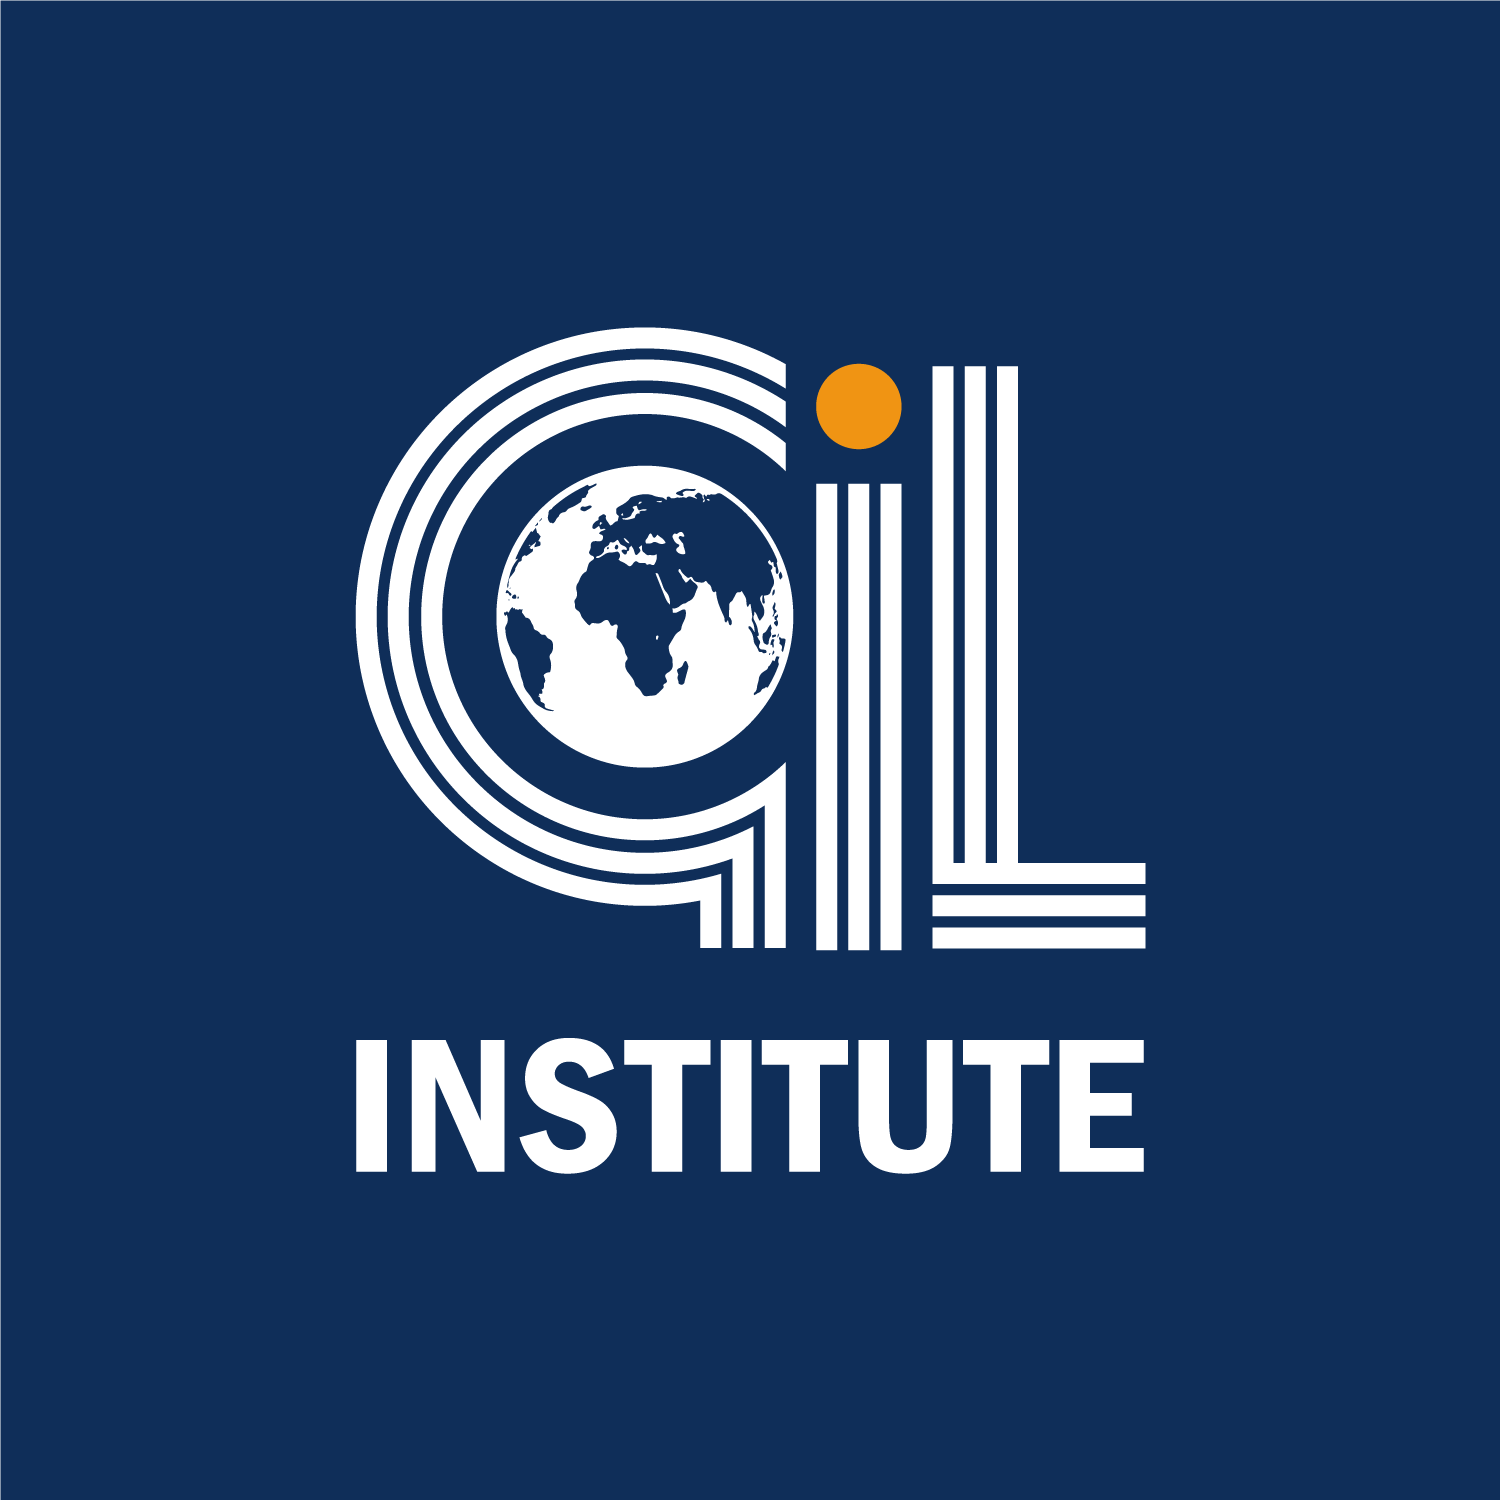 GIL Institute Logo